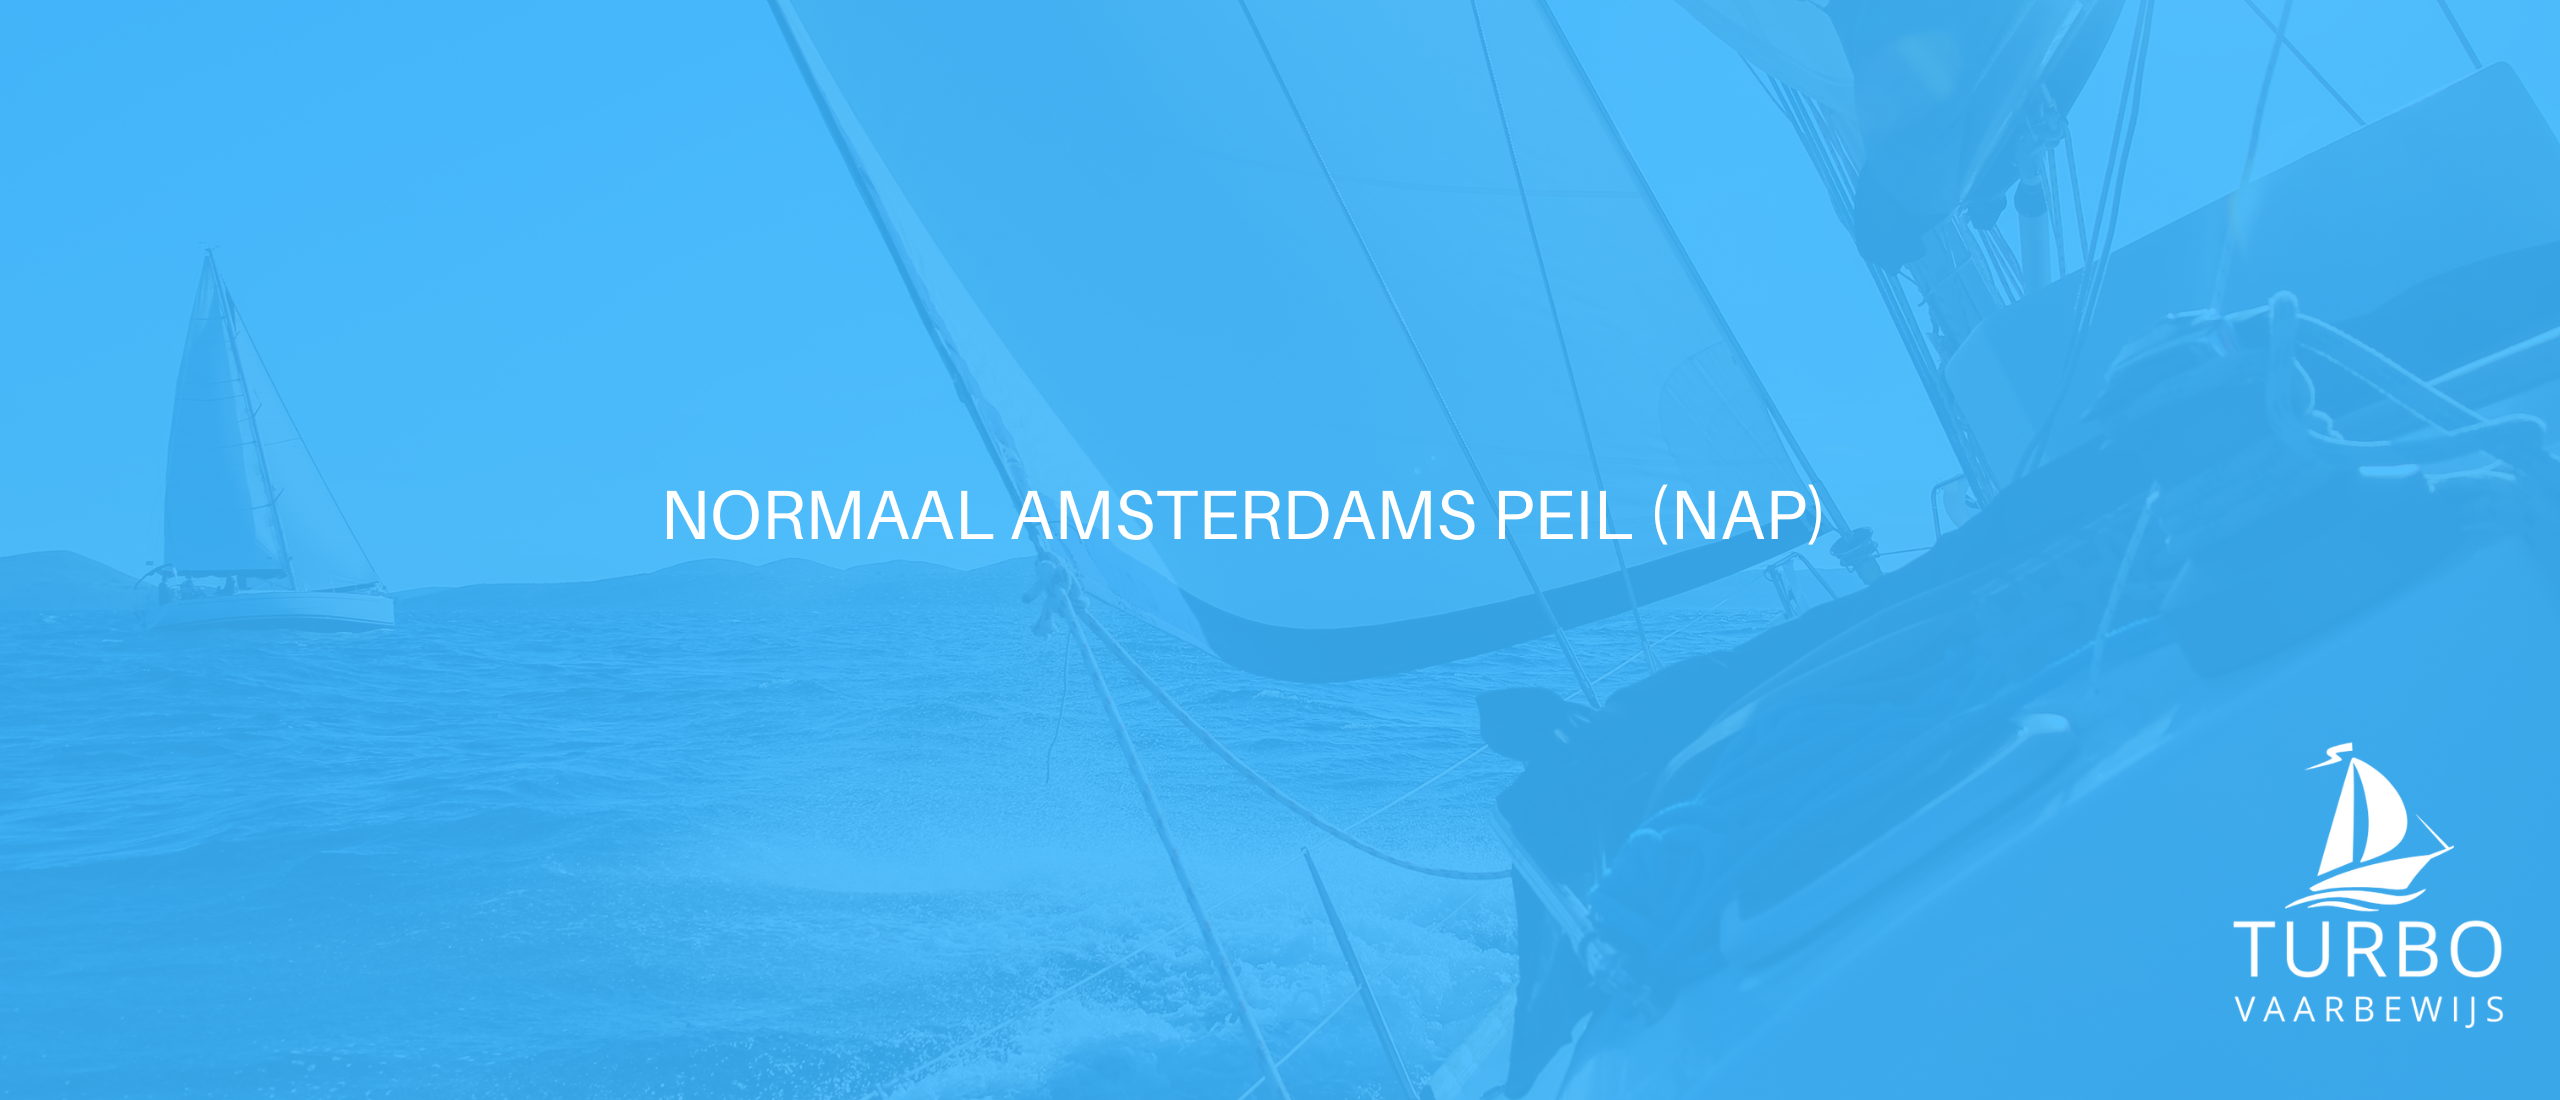 Normaal Amsterdamse peil (NAP)